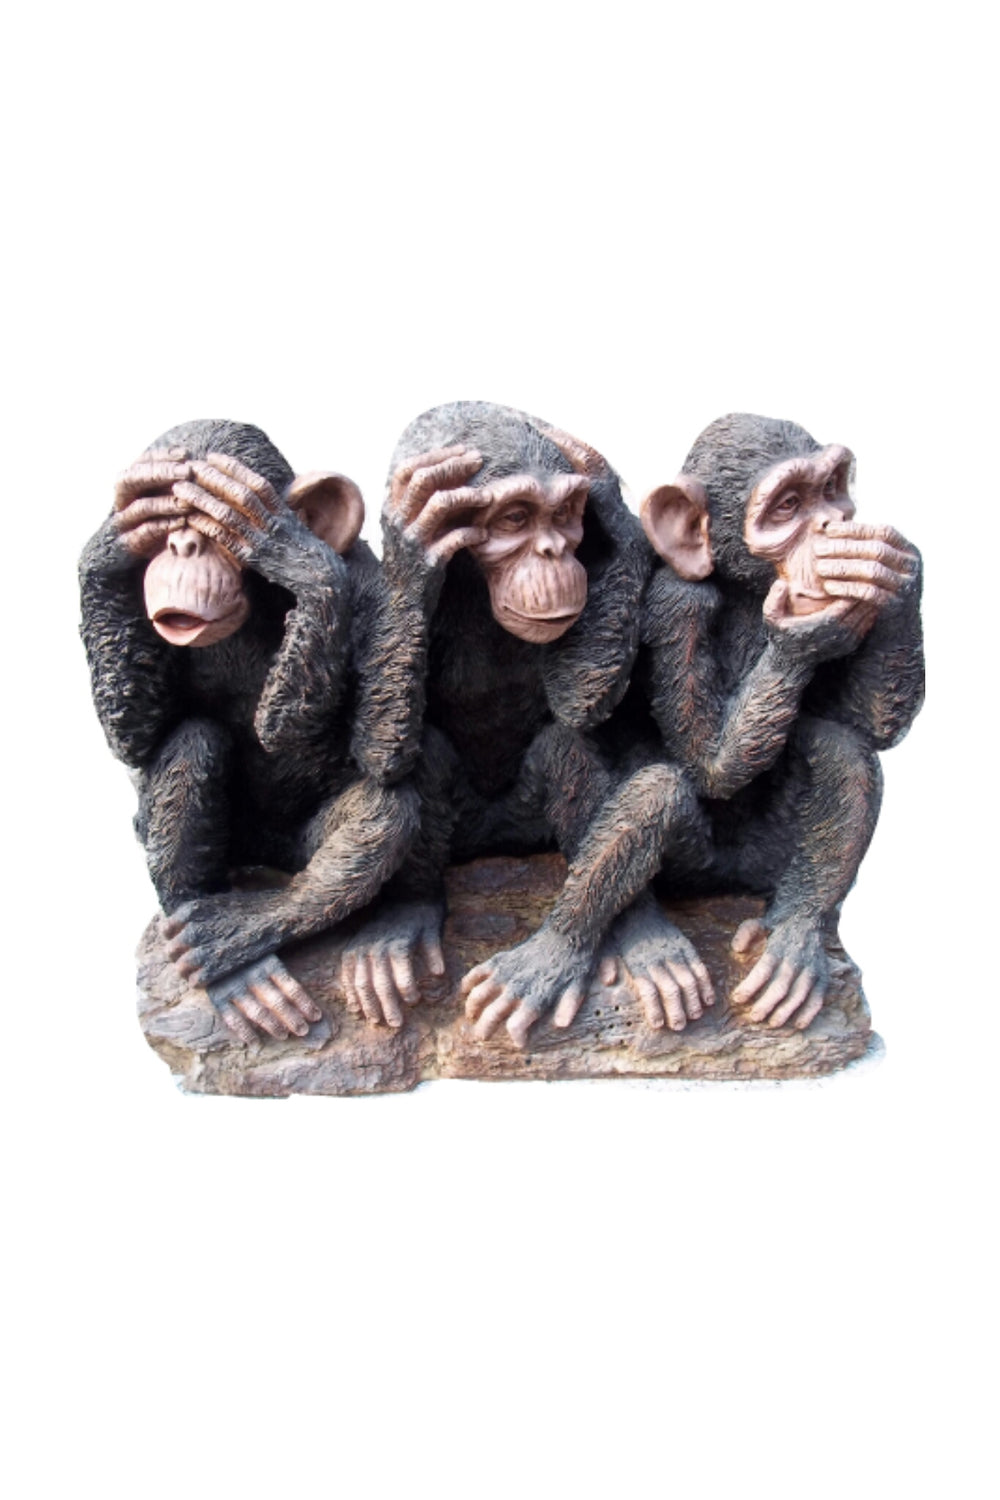 Monkey See, Hear and Speak No Evil Statue HI-LINE GIFT LTD.